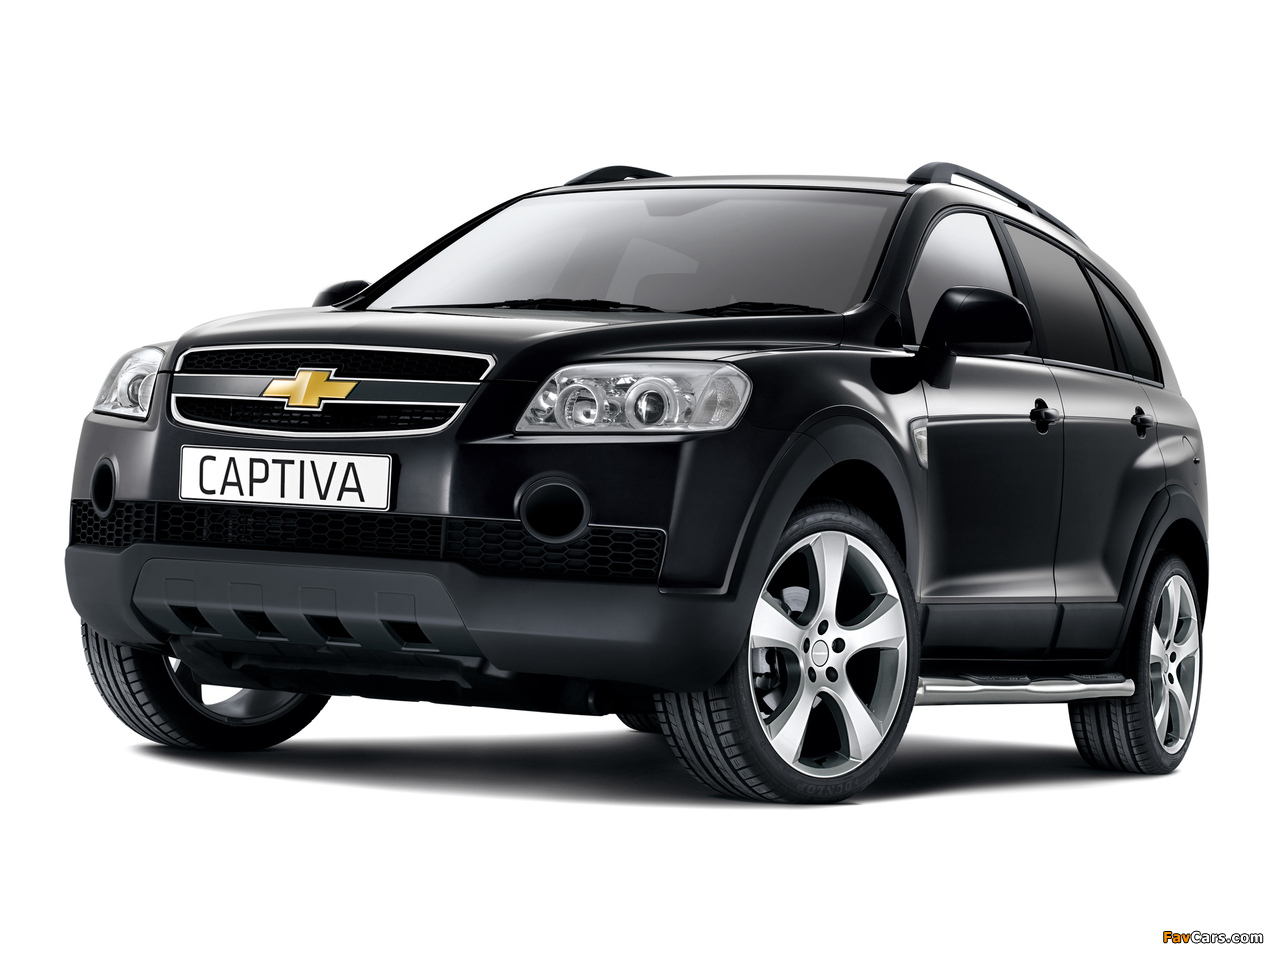 Chevrolet Captiva Ikon 2009 pictures (1280 x 960)